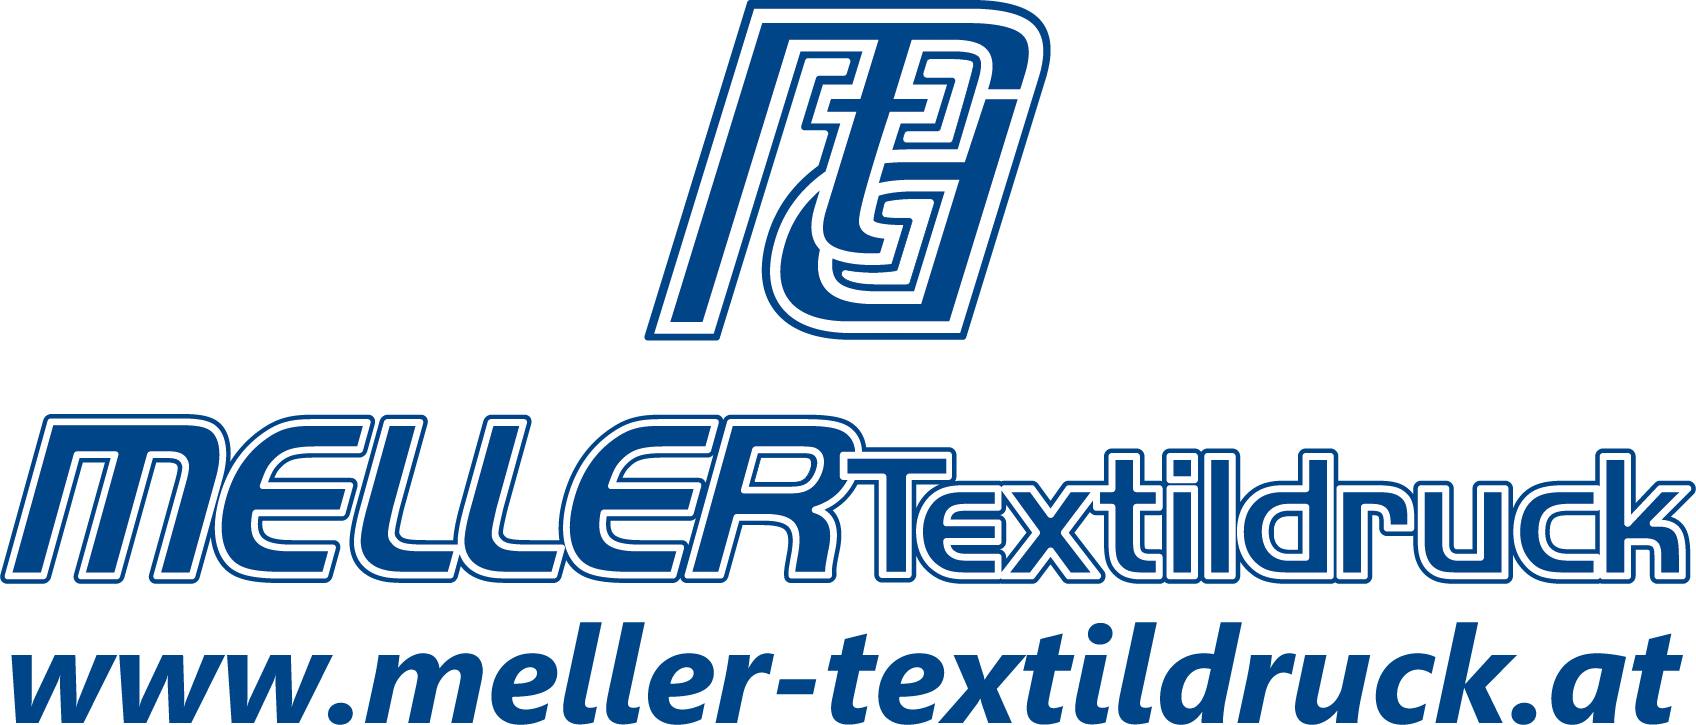 (c) Meller-textildruck.at